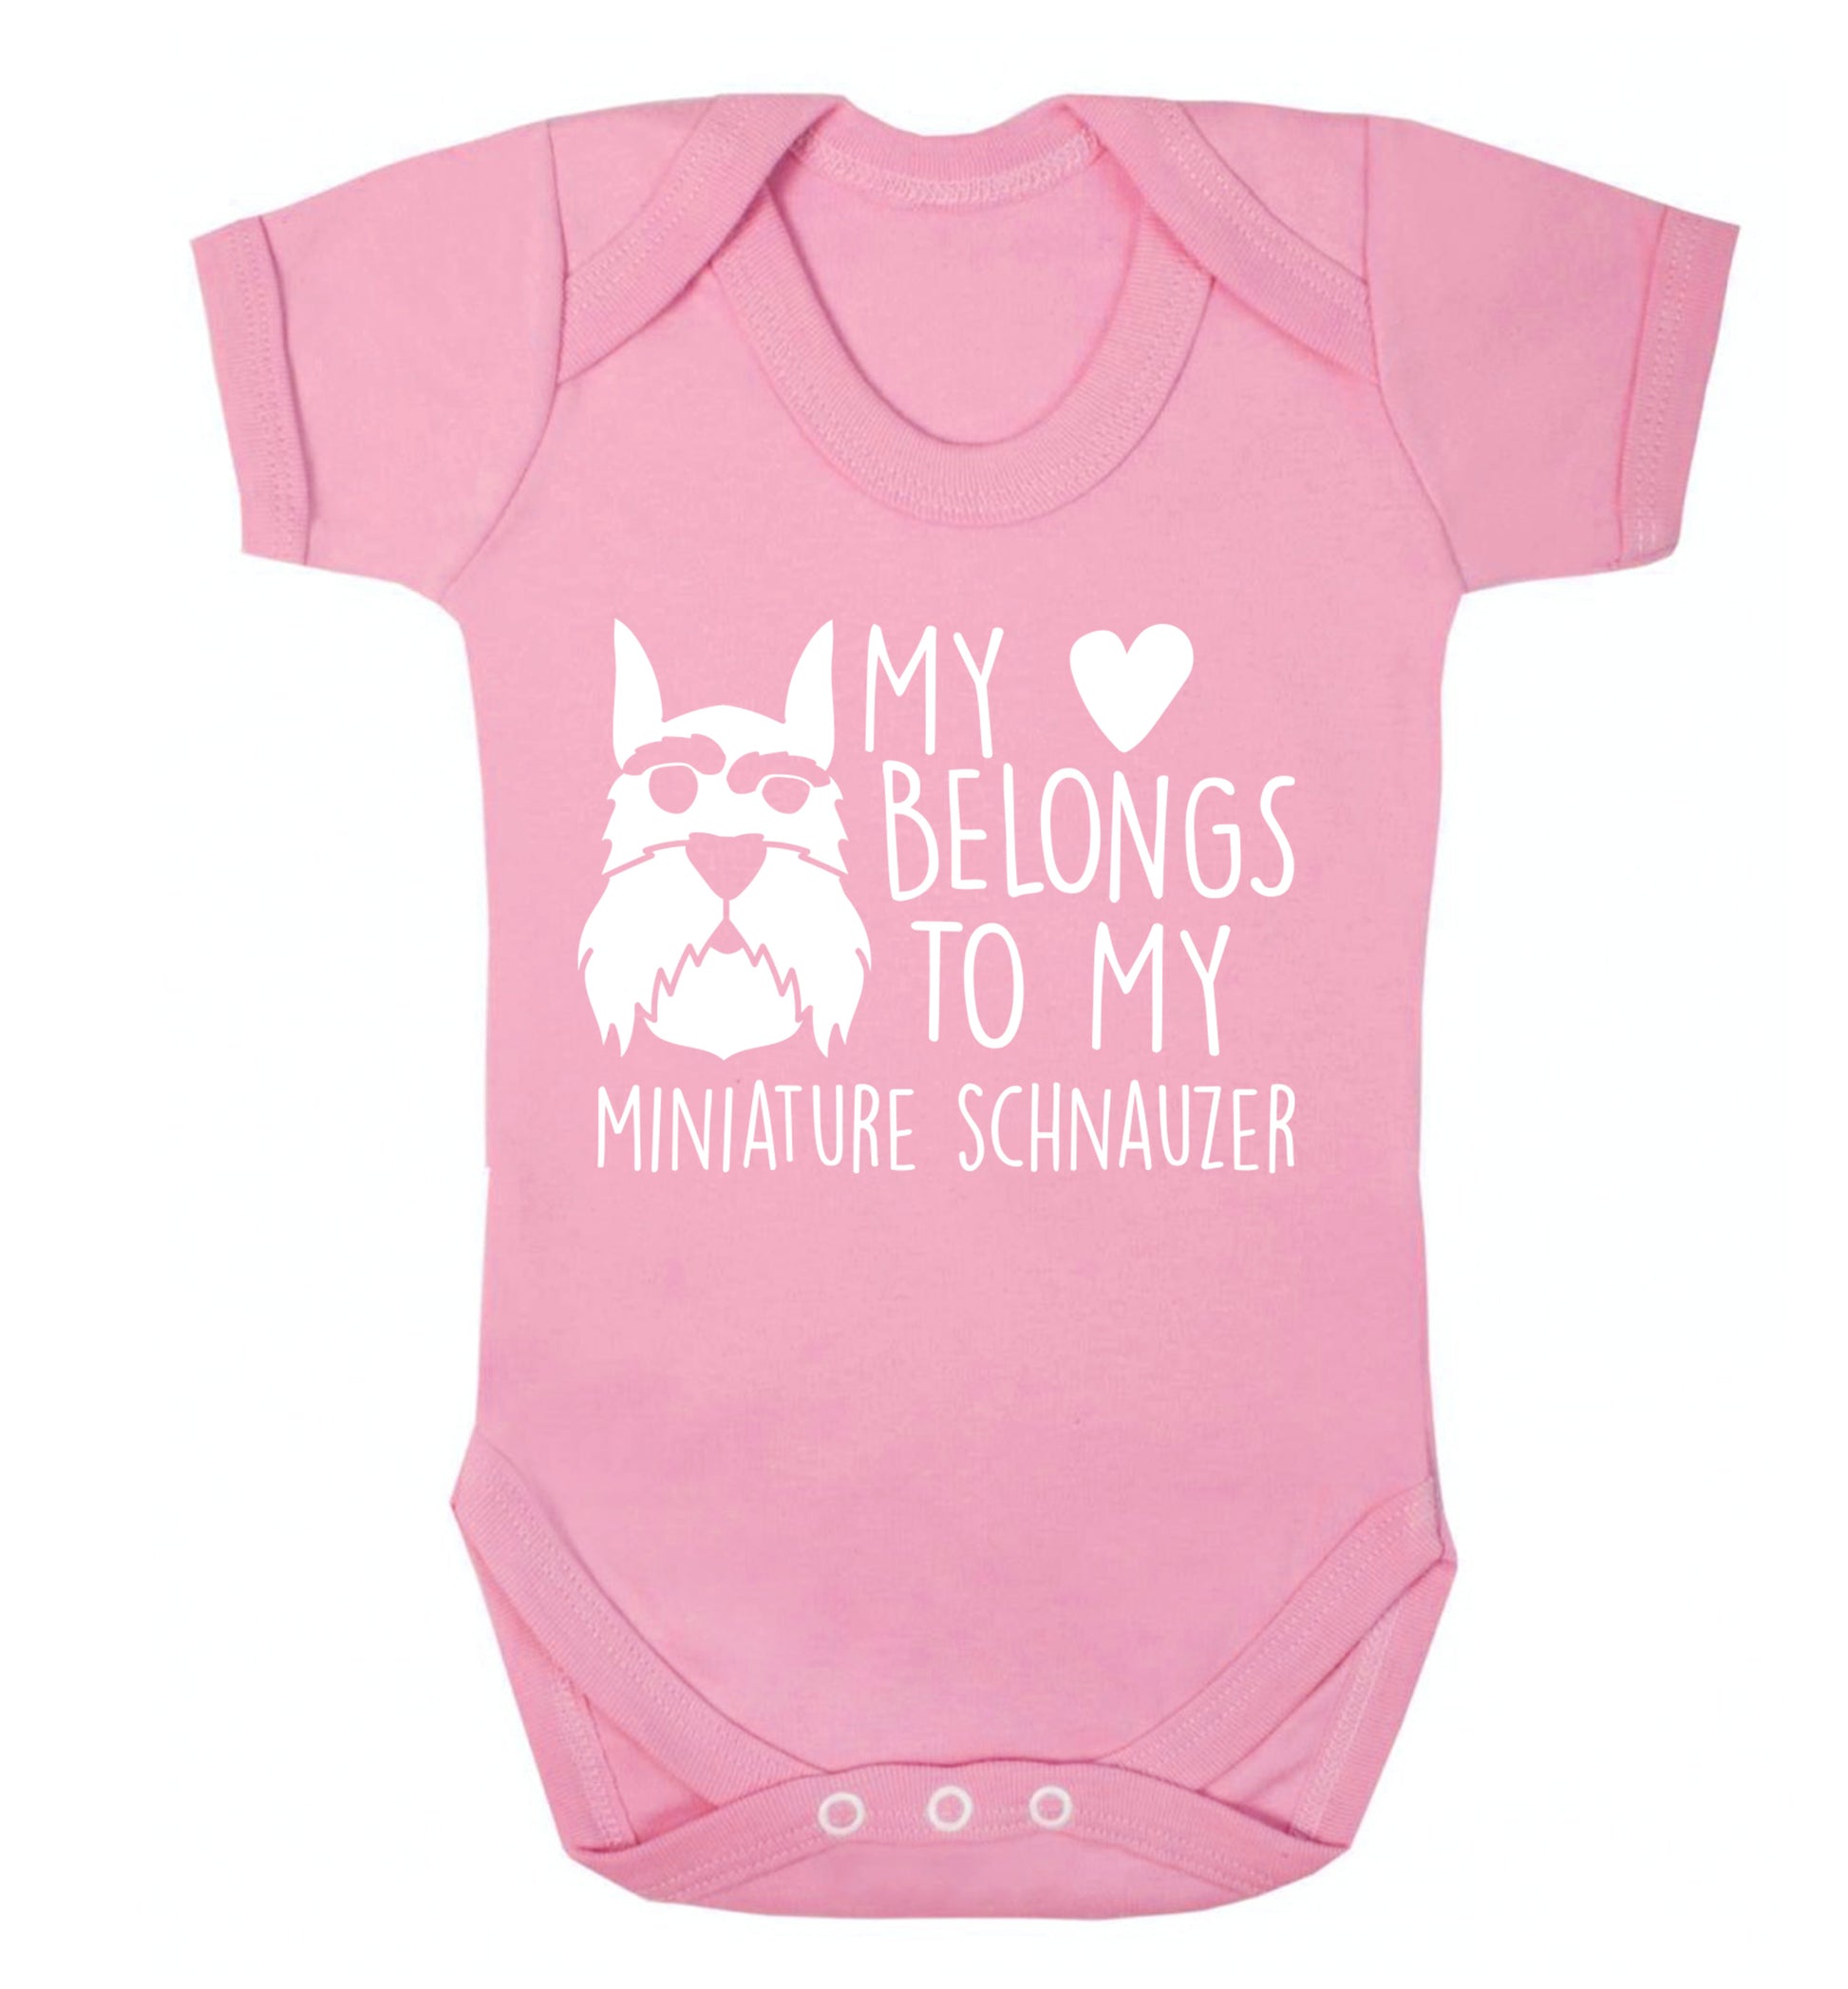 My heart belongs to my miniature schnauzer Baby Vest pale pink 18-24 months